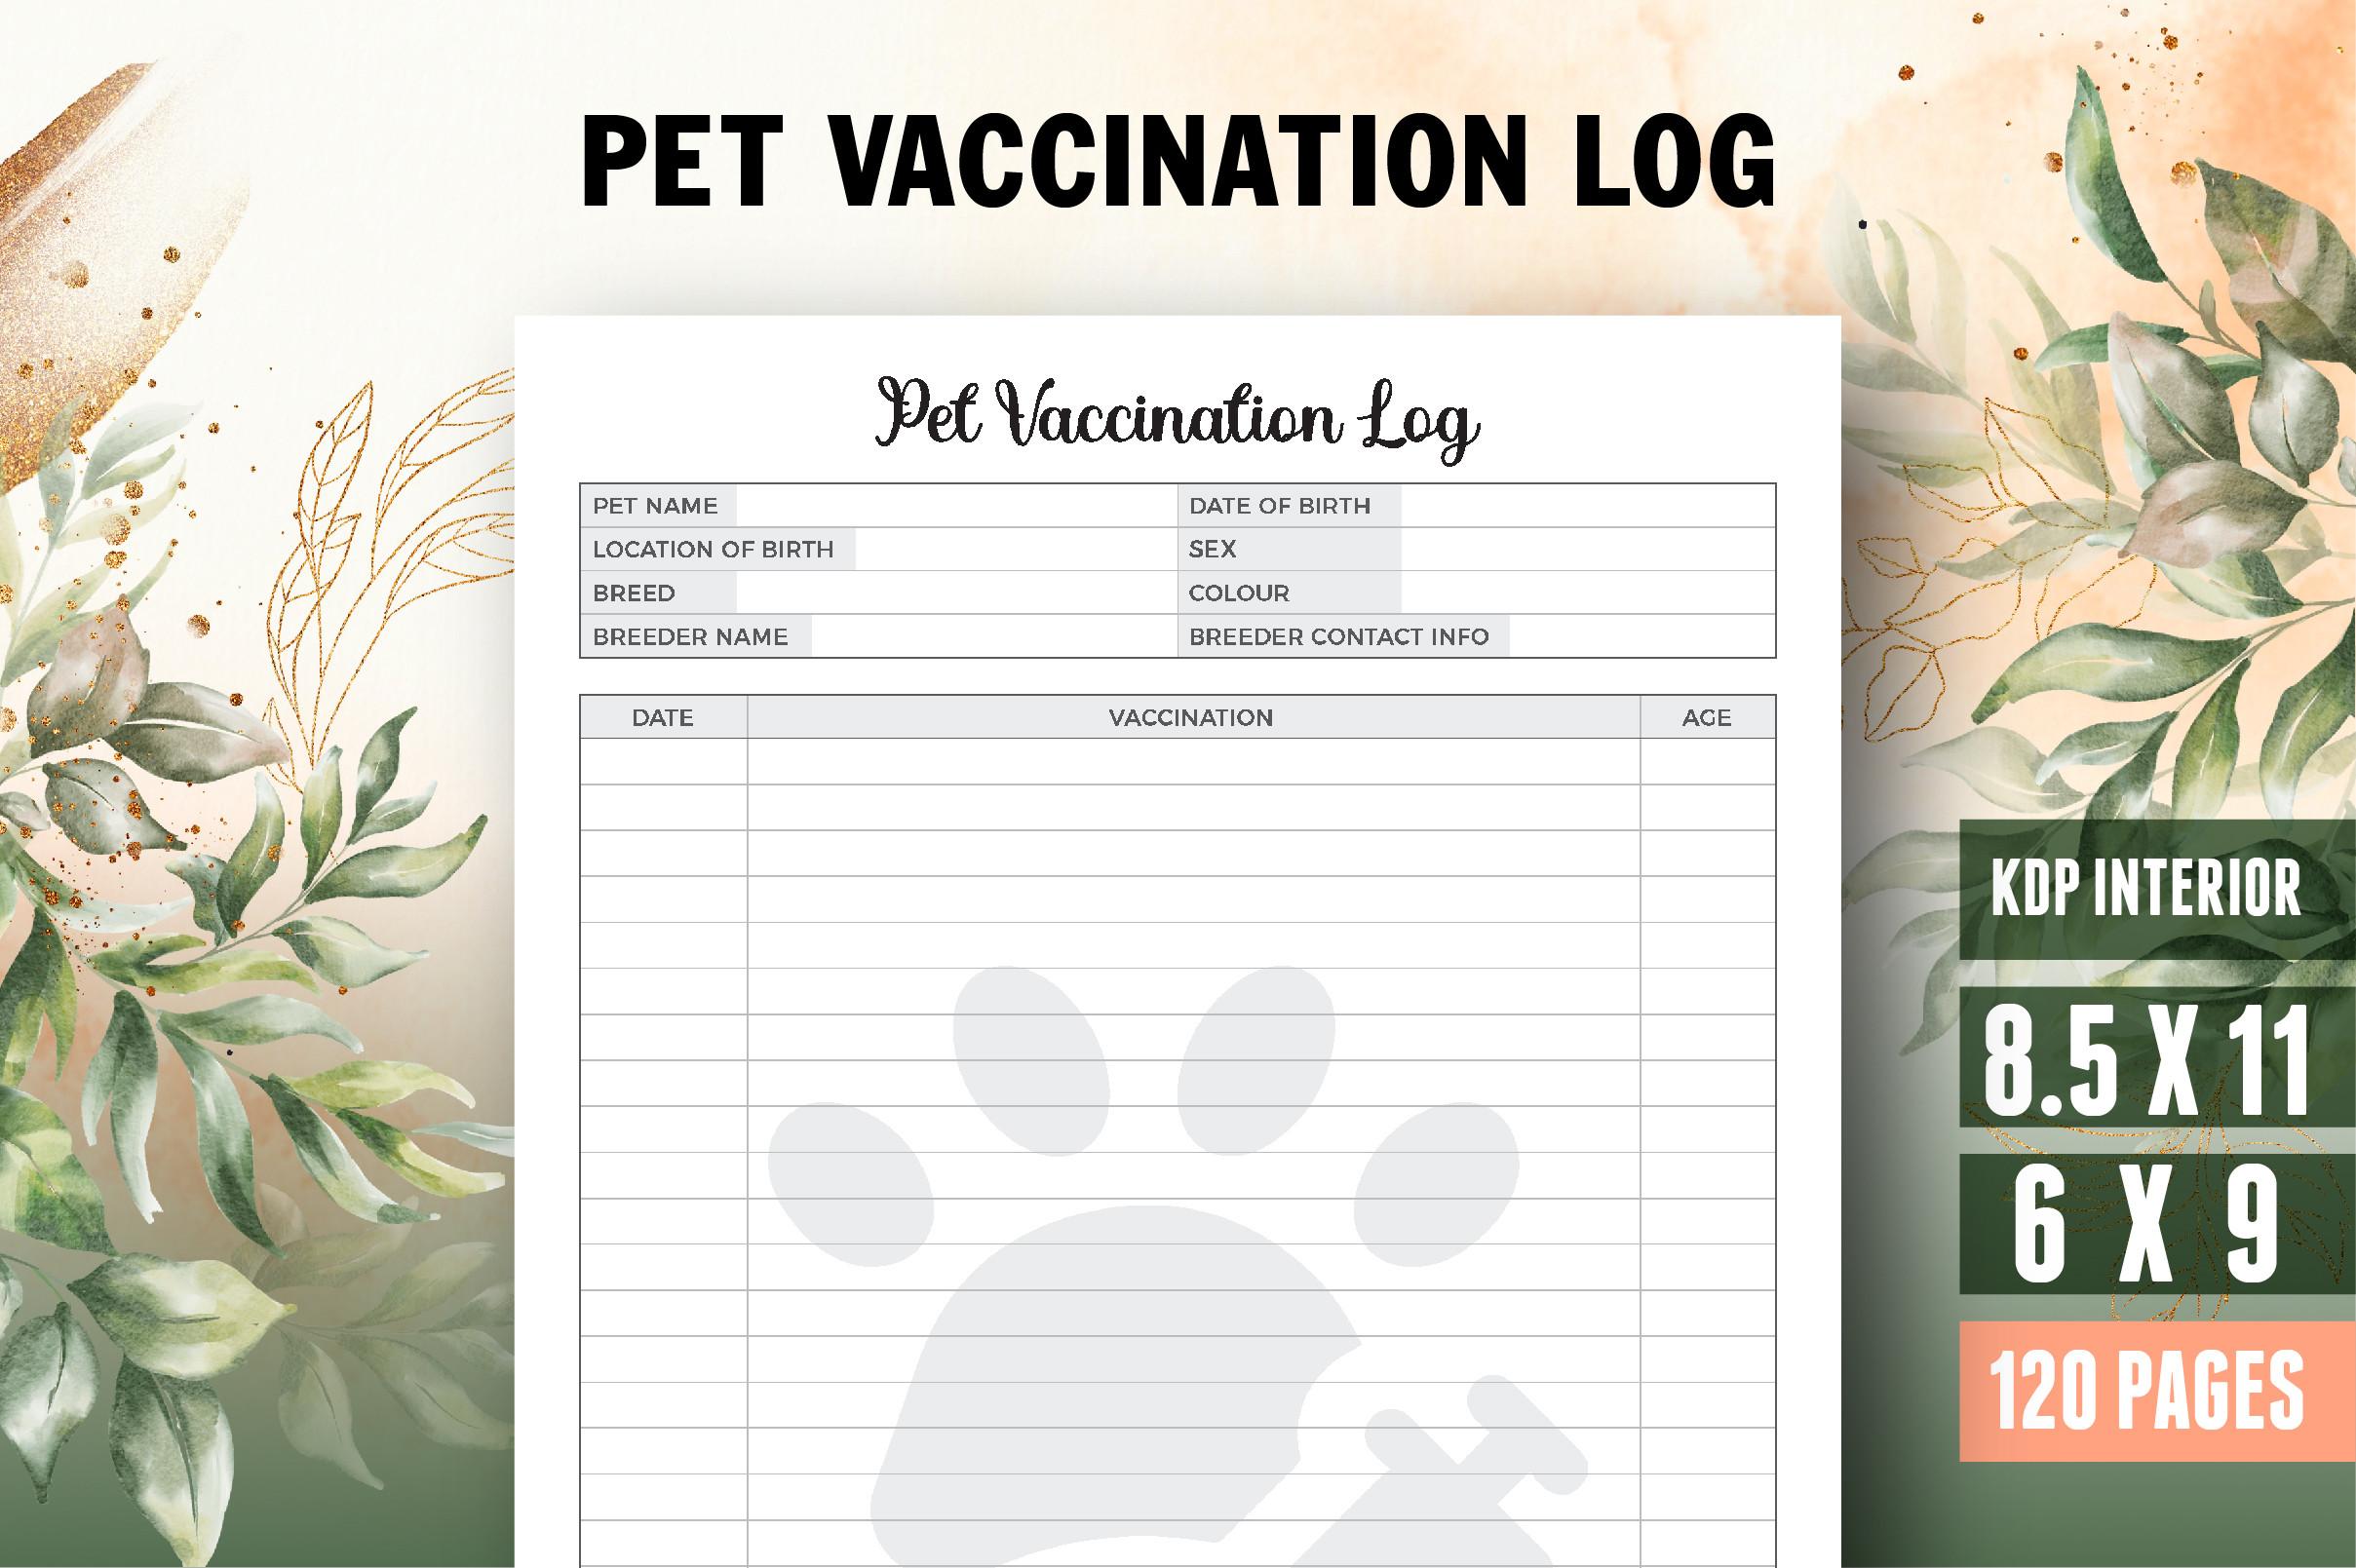 Pet Vaccination Log Book, Record